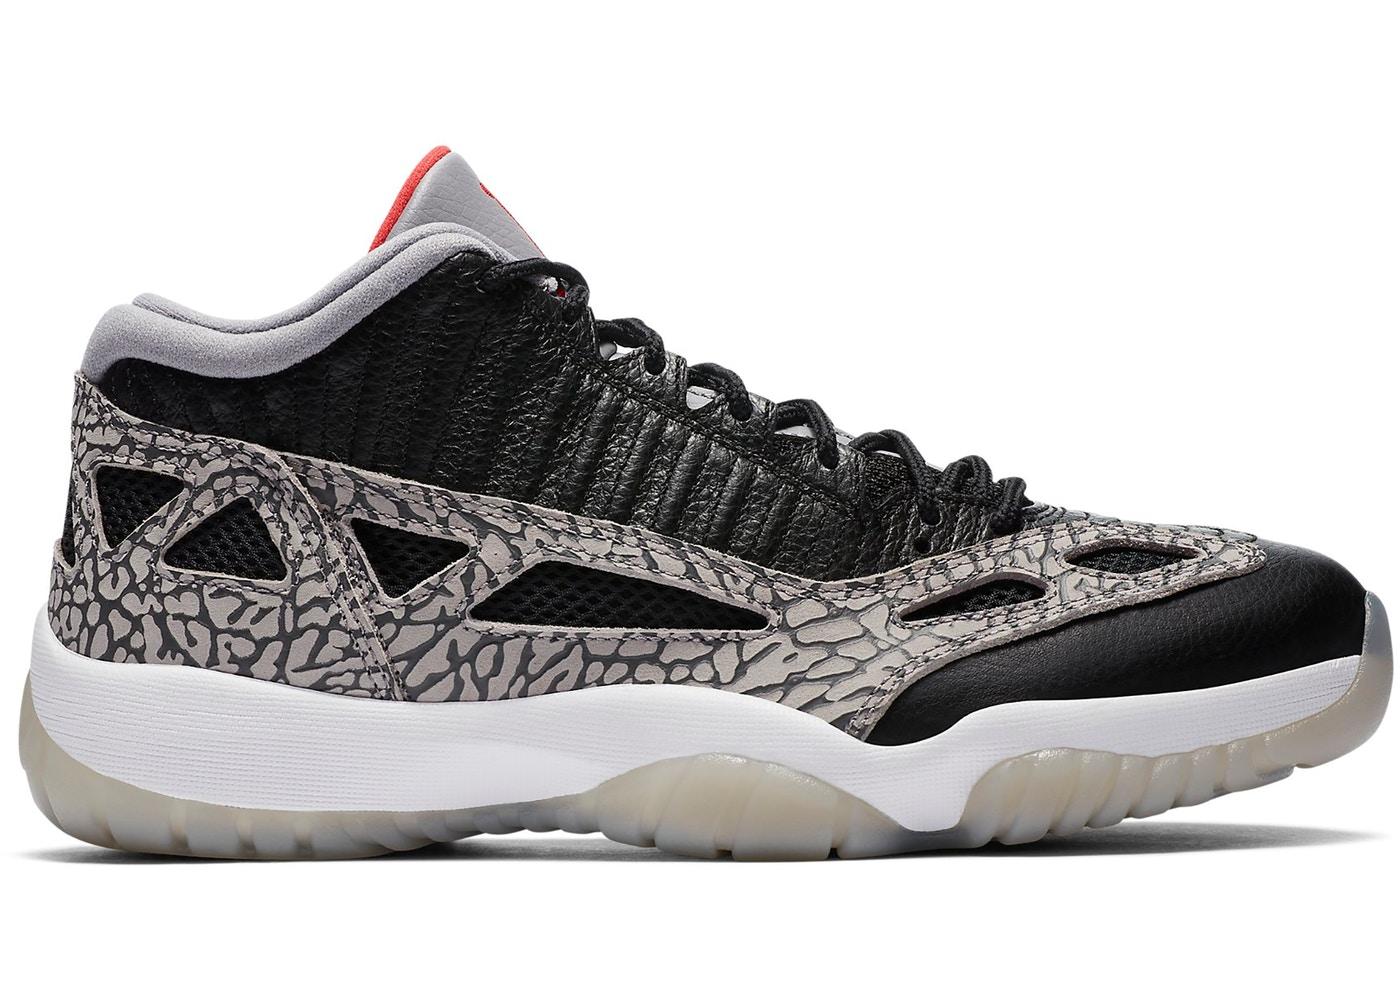 This Weeks Upcoming Sneaker Releases featuring New Air Jordan 1 OG Light Smoke Grey